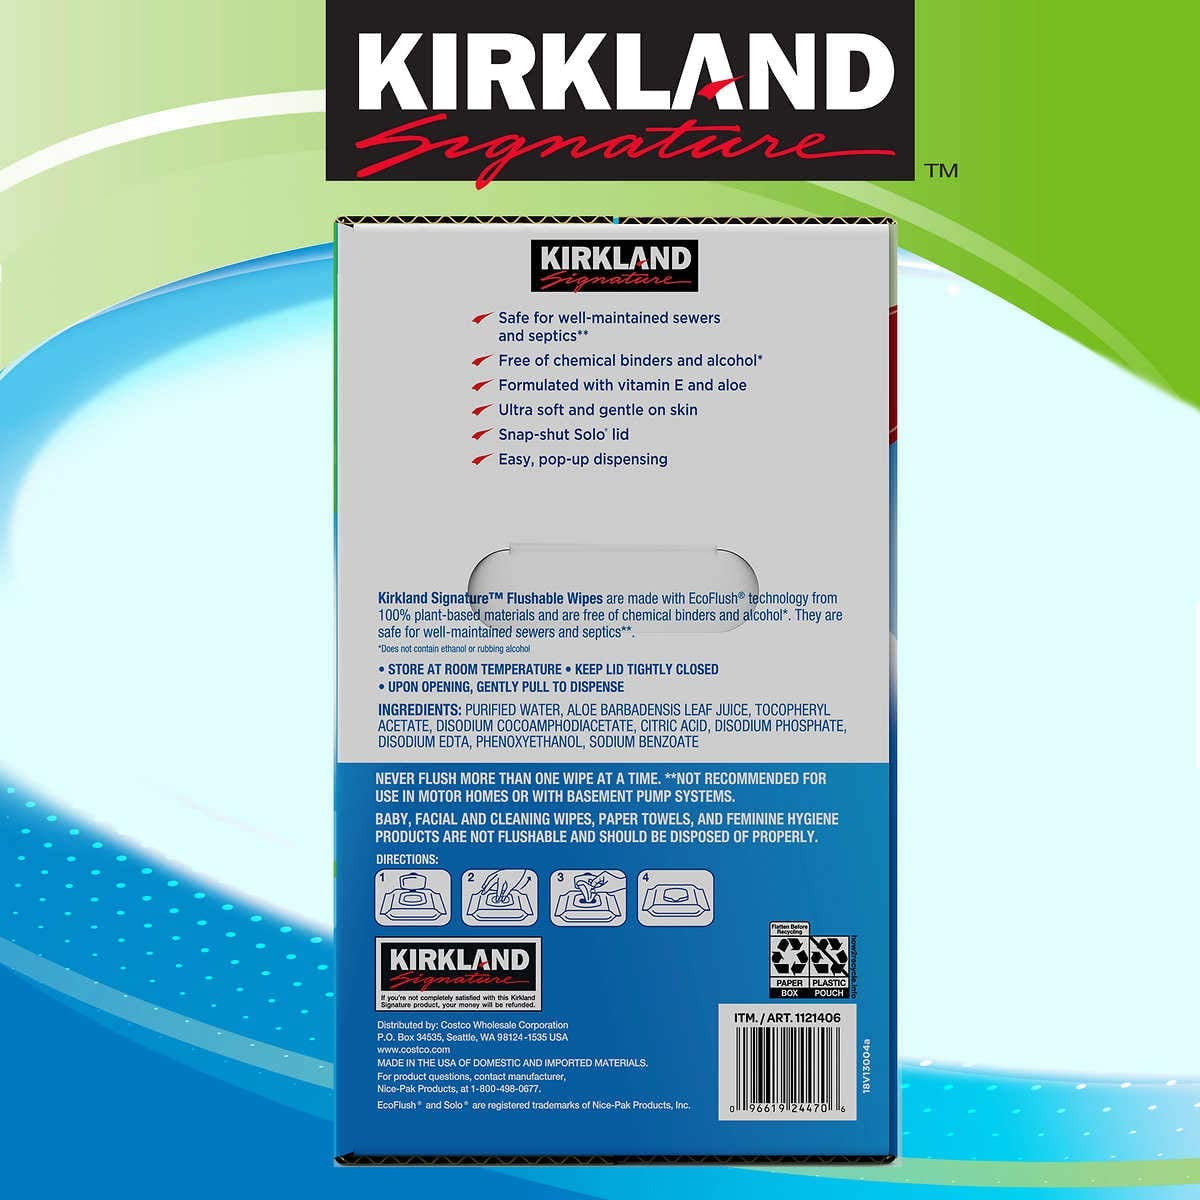 2 x KIRKLAND SIGNATURE MOIST FLUSHABLE WIPES 632 WET WIPE CLEANSING HYGIENE CARE 